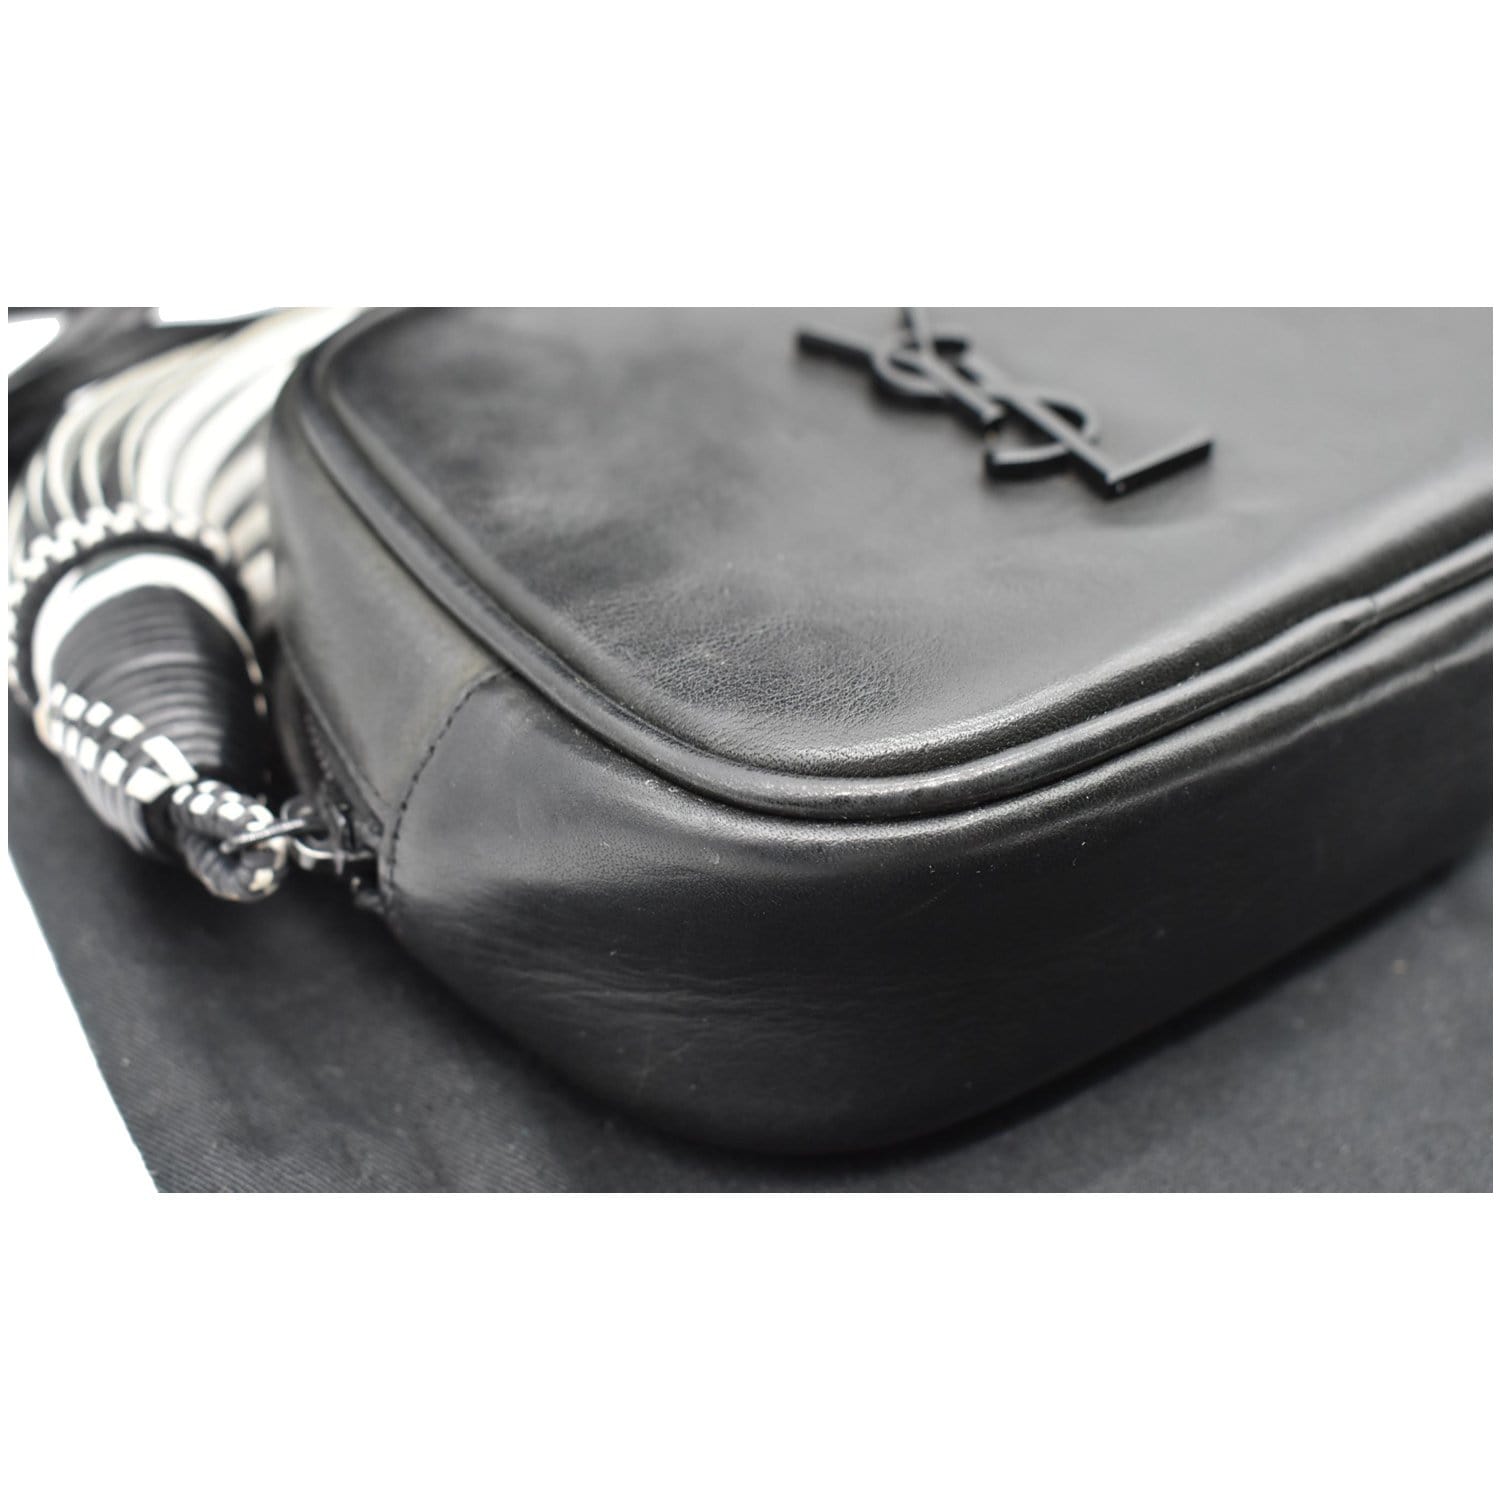 Blogger leather crossbody bag Saint Laurent Black in Leather - 33794871